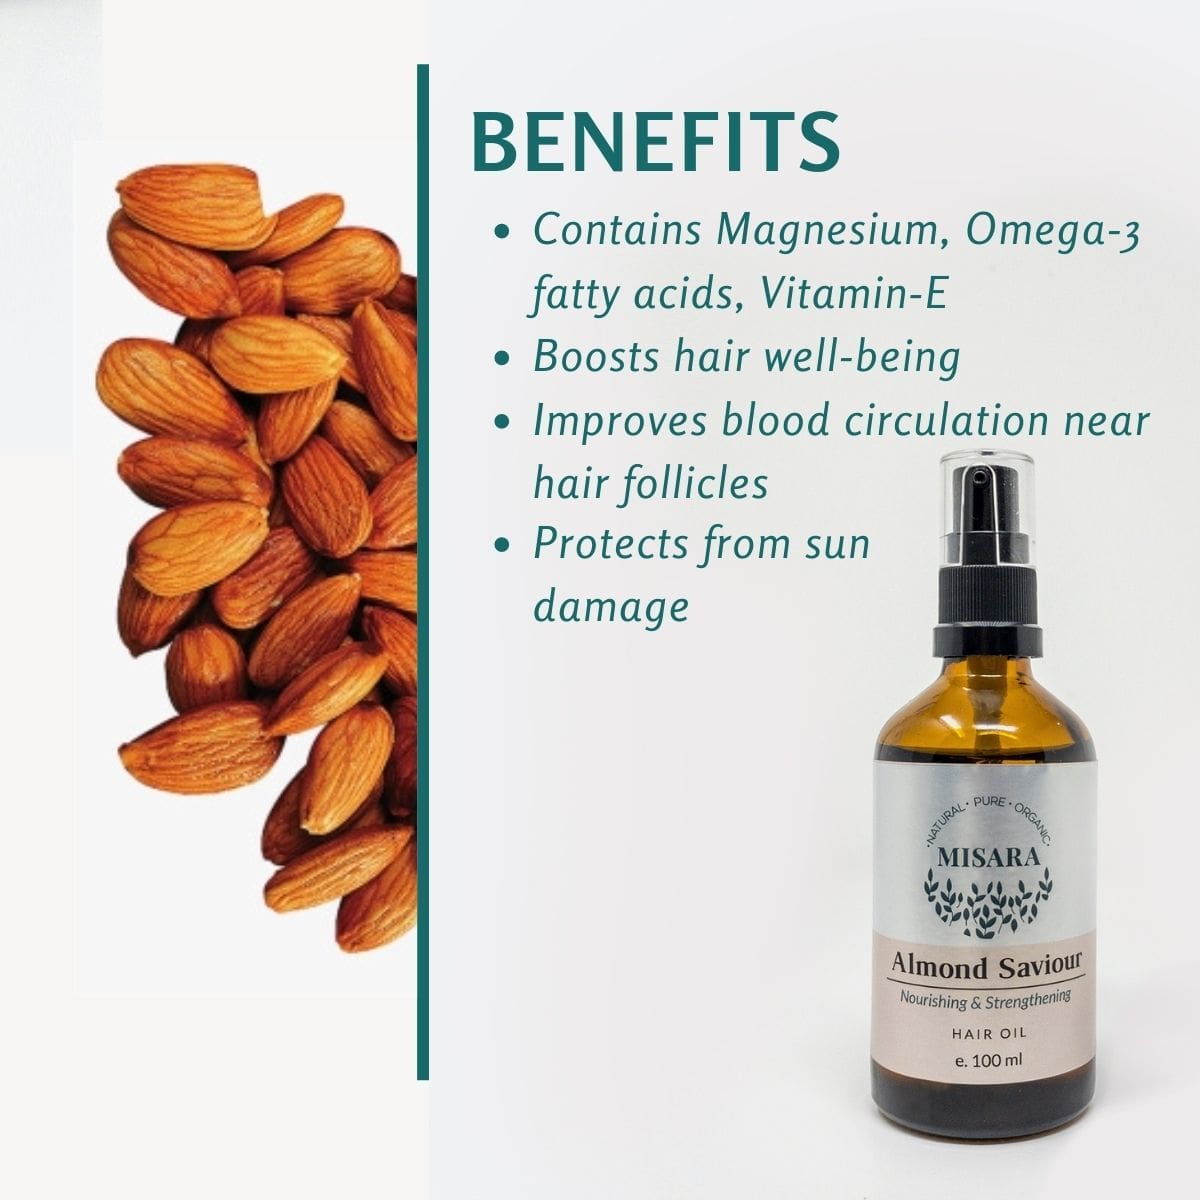 Patanjali Herbal  Natural Almond Hair Oil 200 ML  Buy Online